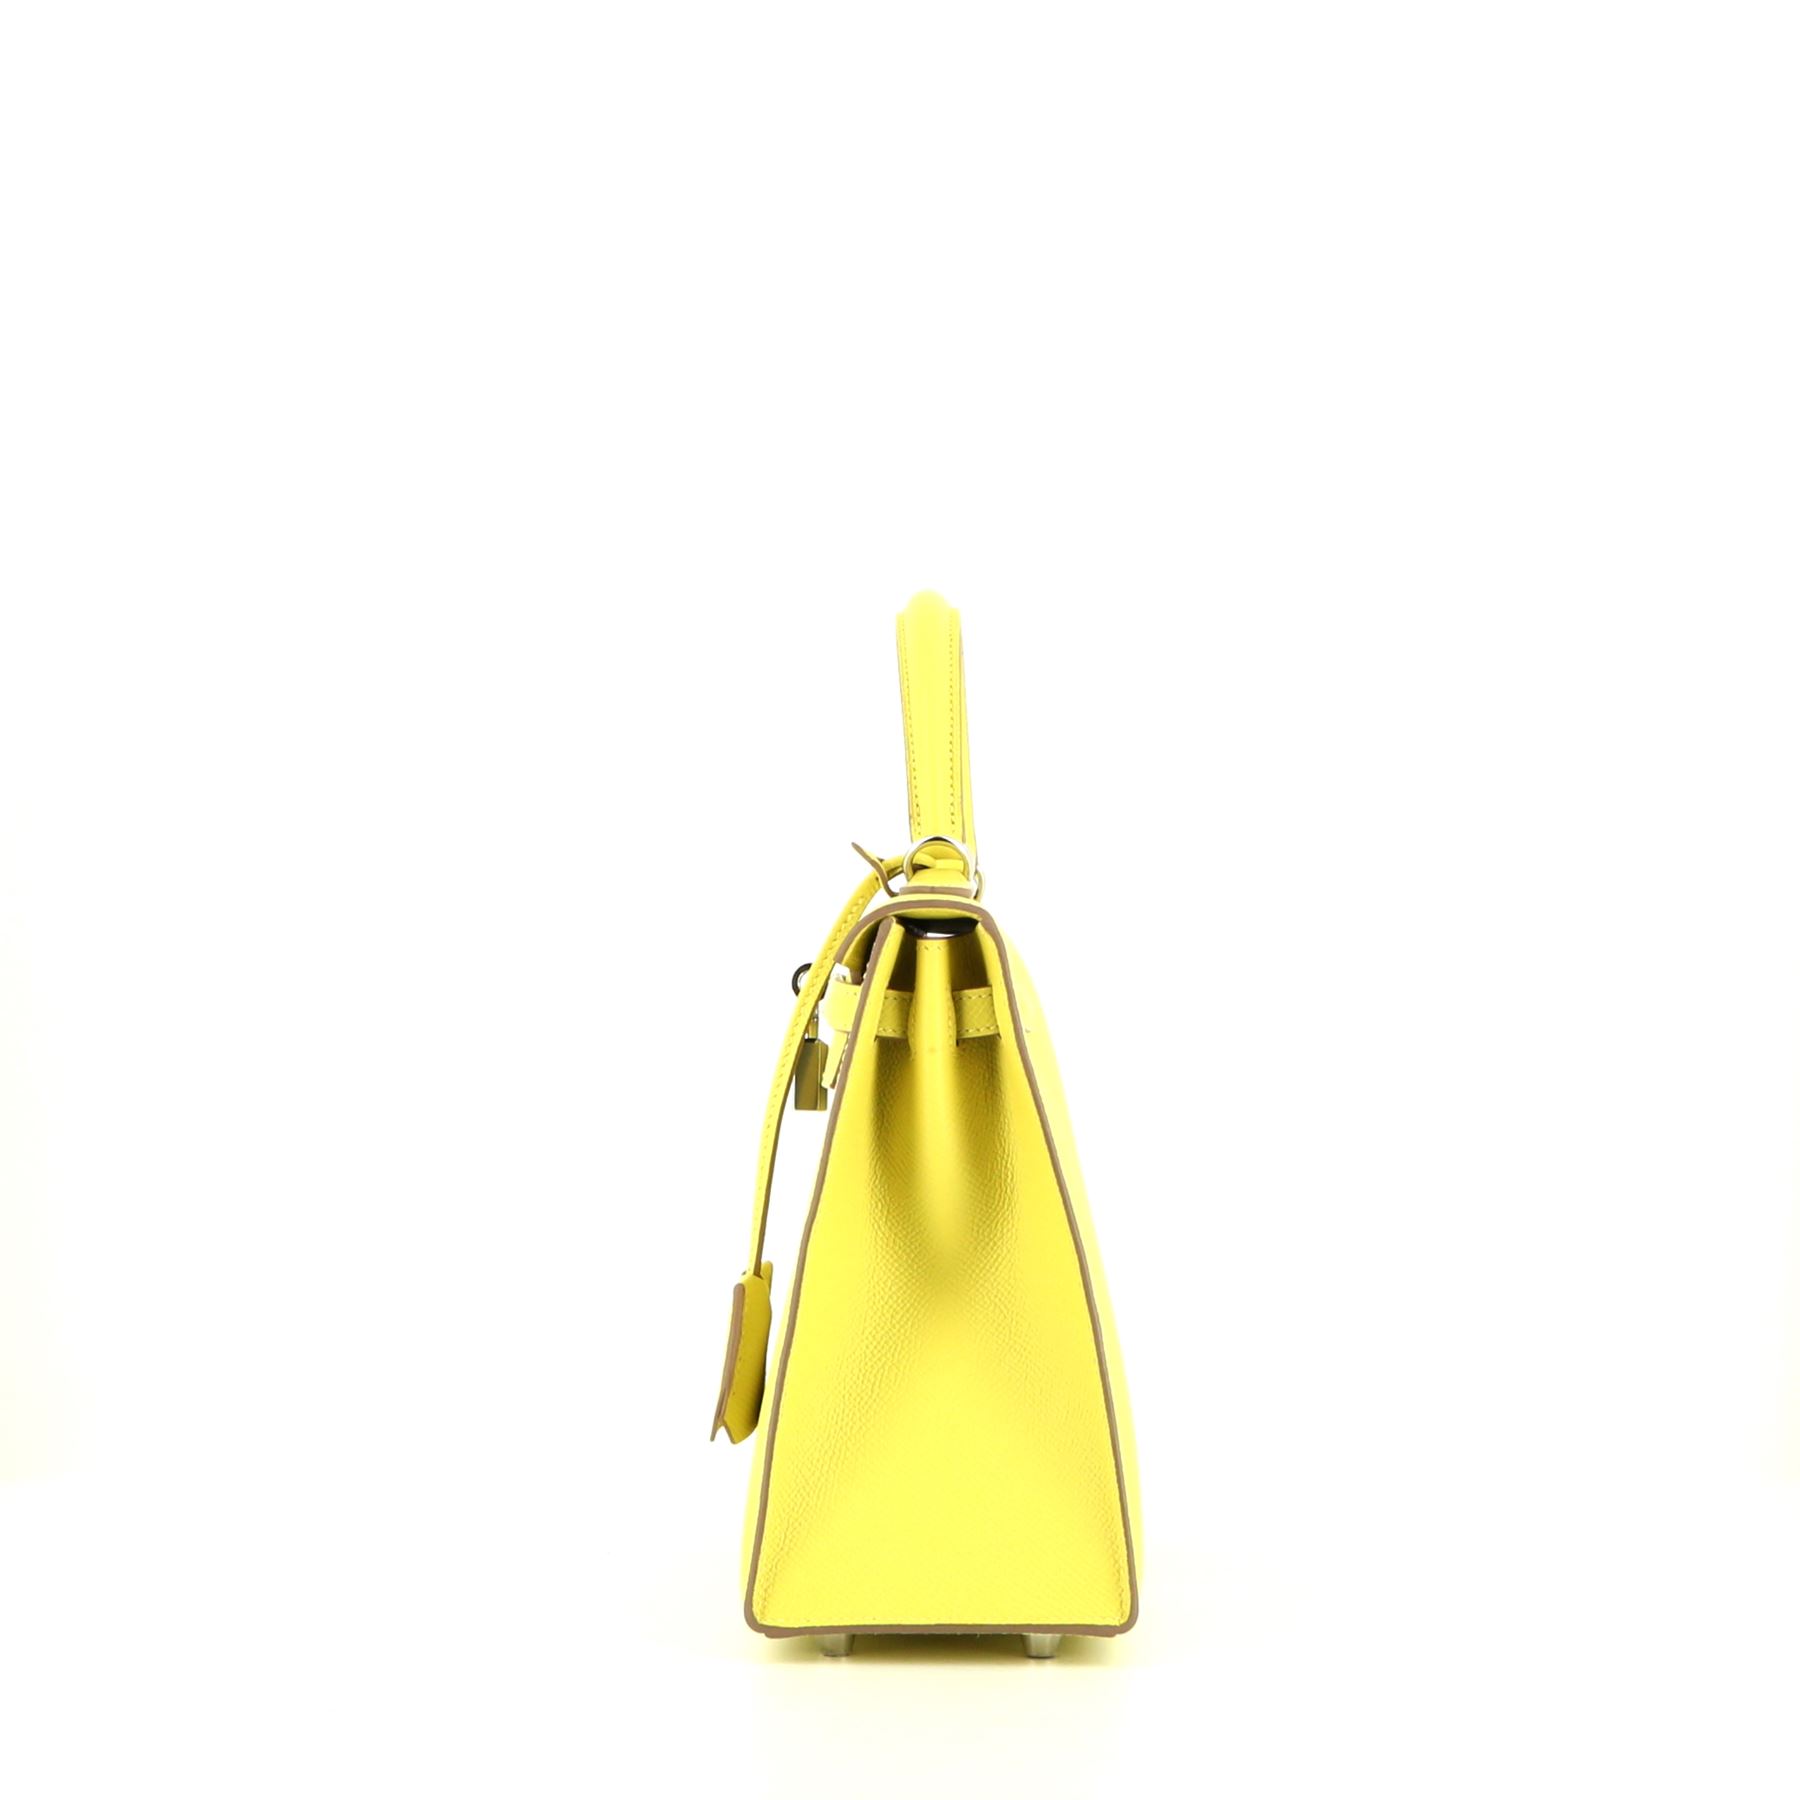 Kelly 25 cm Handbag In Yellow Lime Epsom Leather